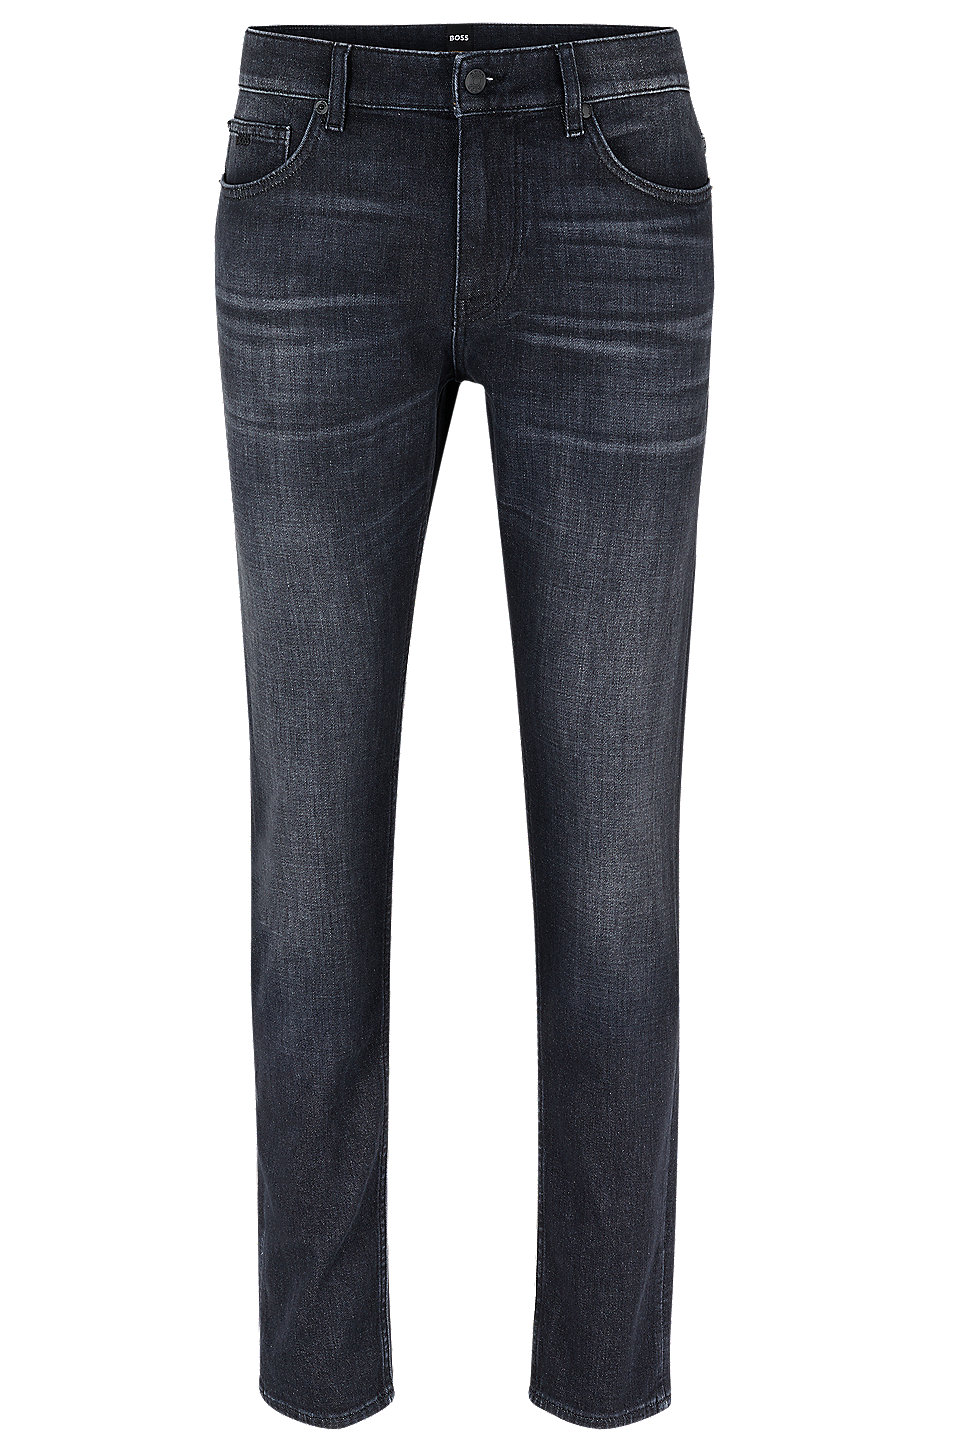 BOSS - Slim-fit jeans in super-soft gray Italian denim